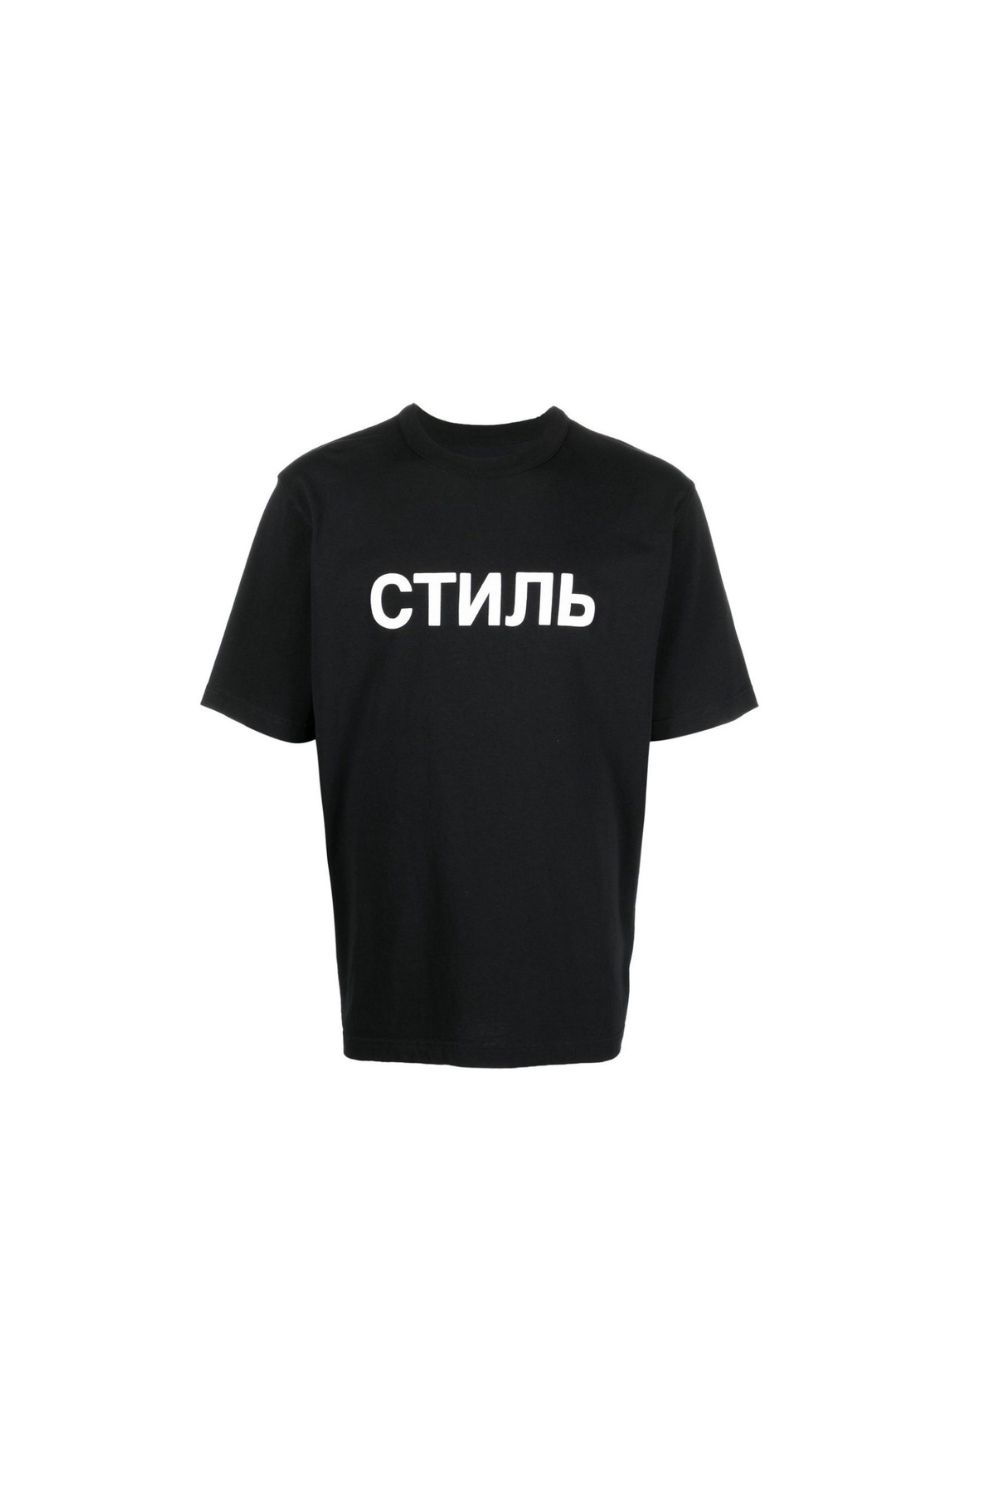 Heron Preston t shirt con logo ctnmb